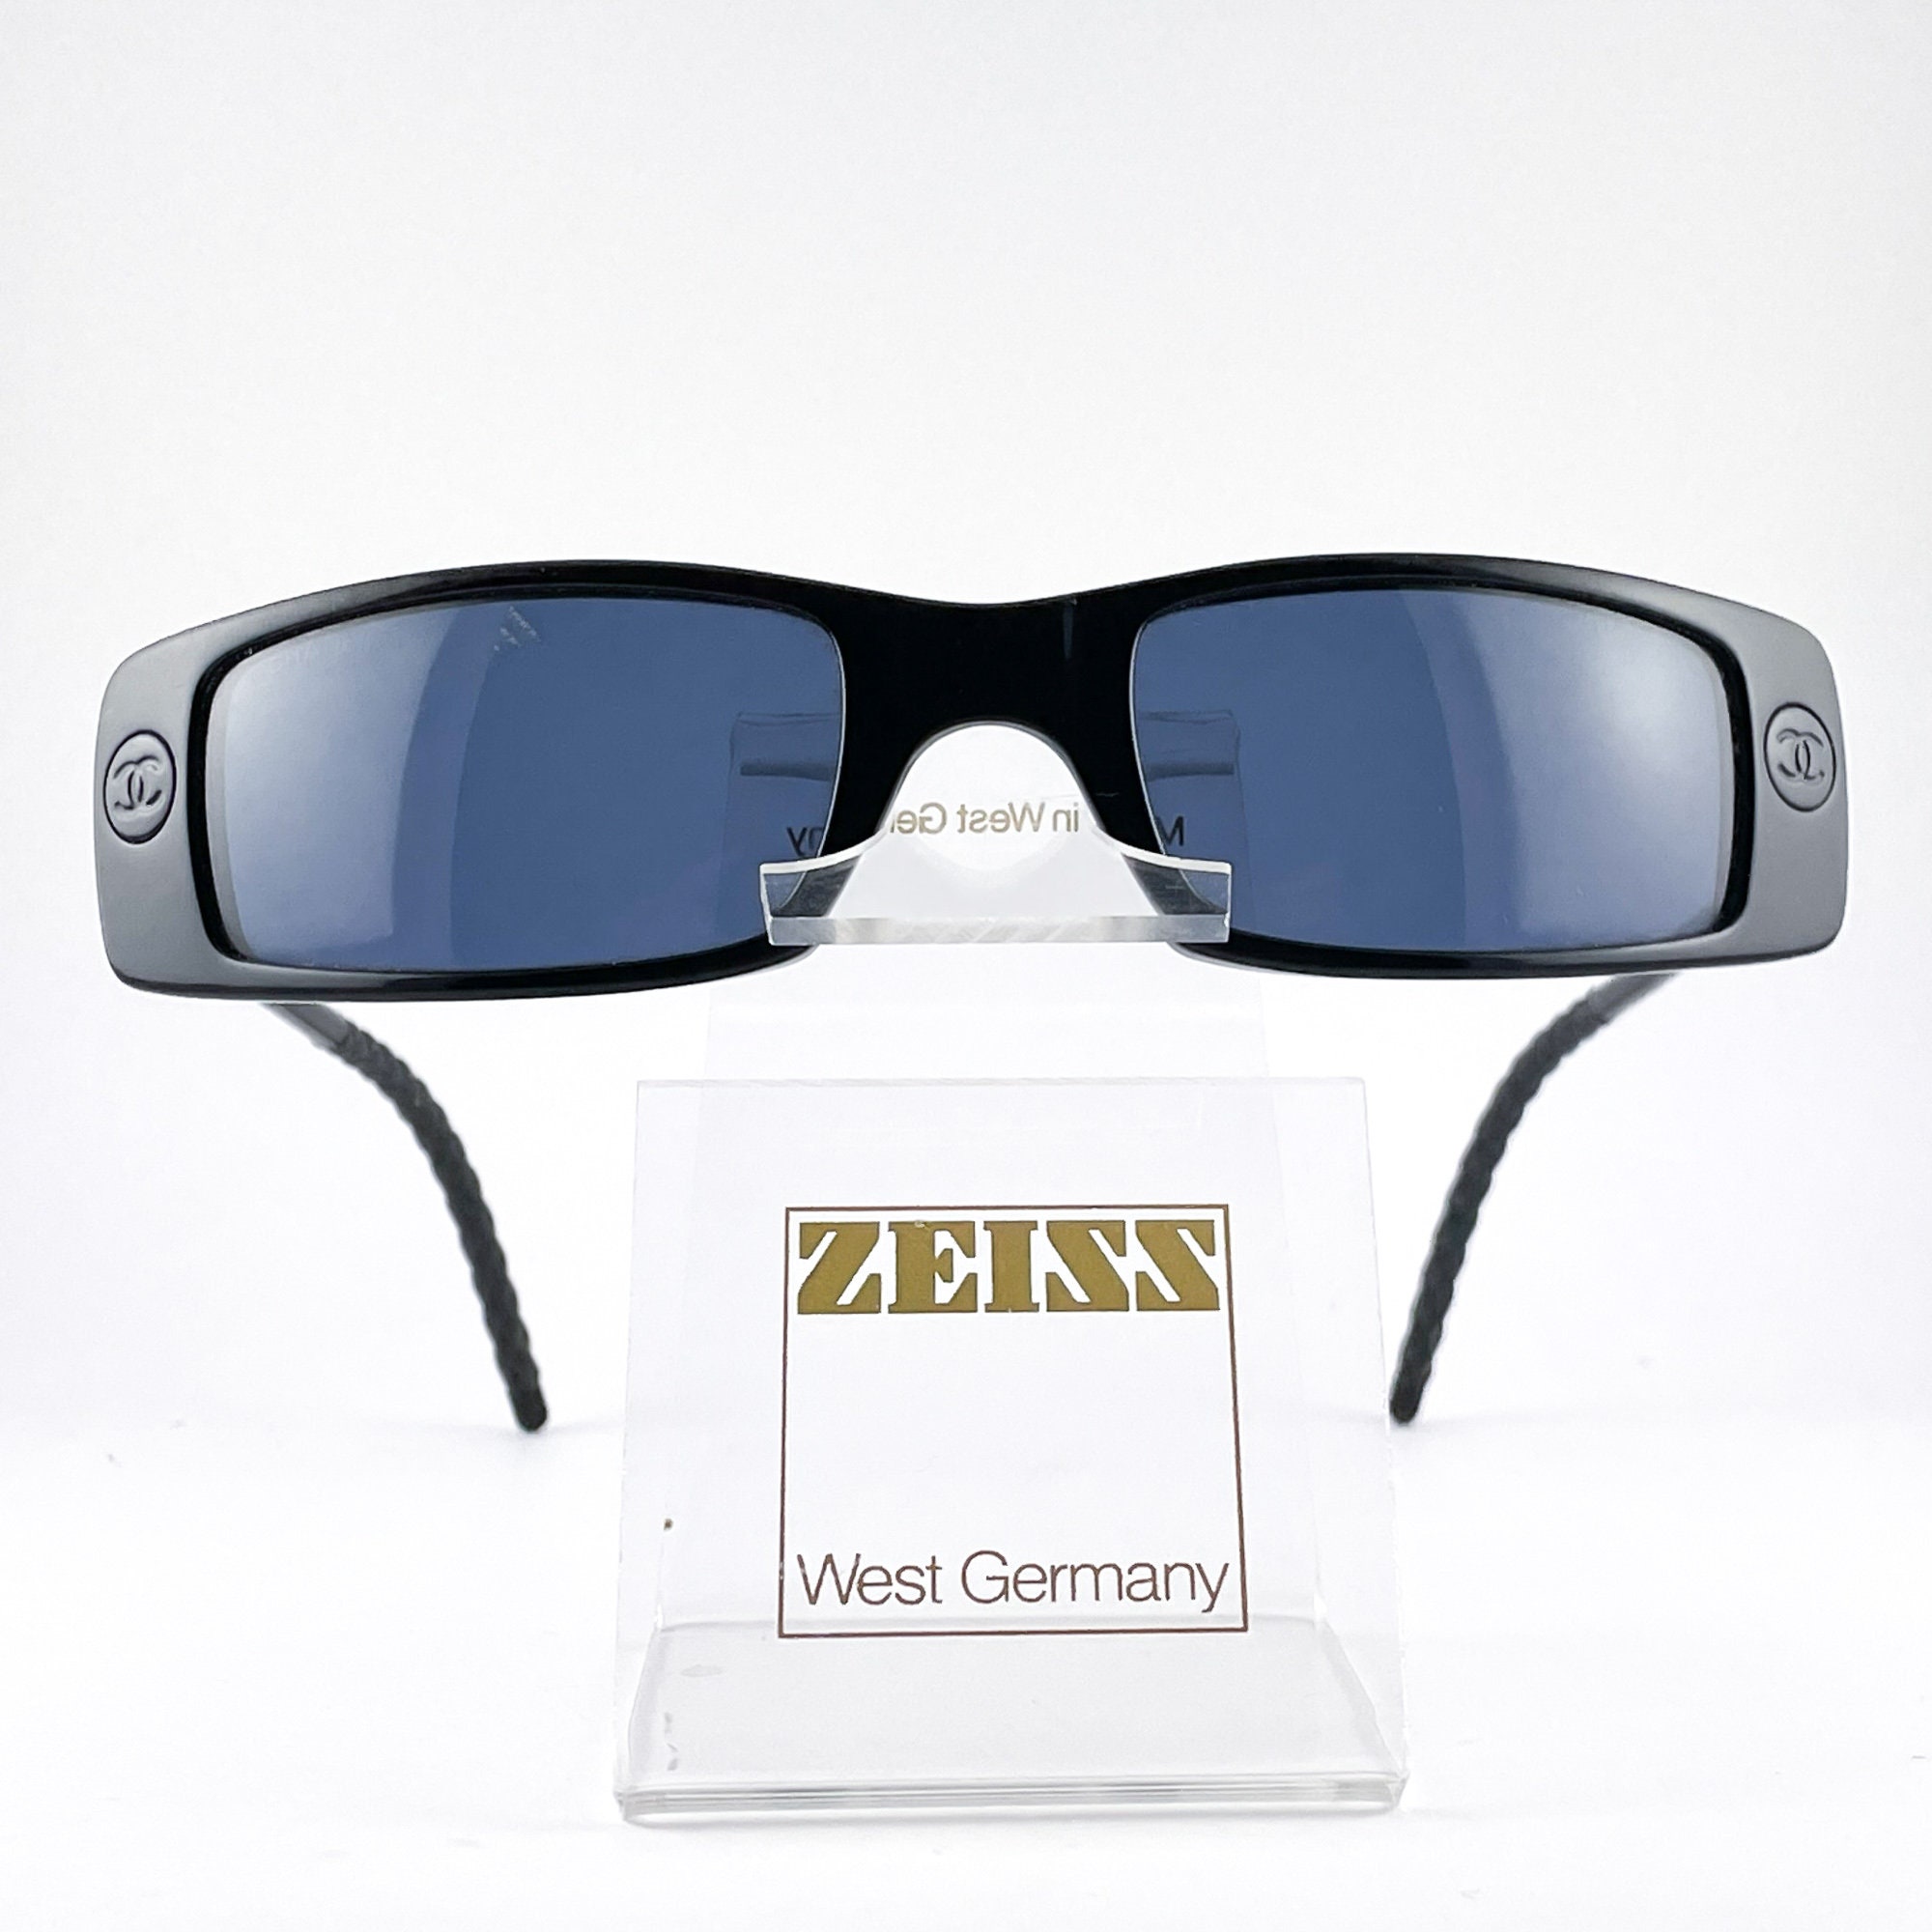 CHANEL Authentic vintage Eye glasses #2020  Vintage eye glasses, Chanel  optical, Mens eye glasses